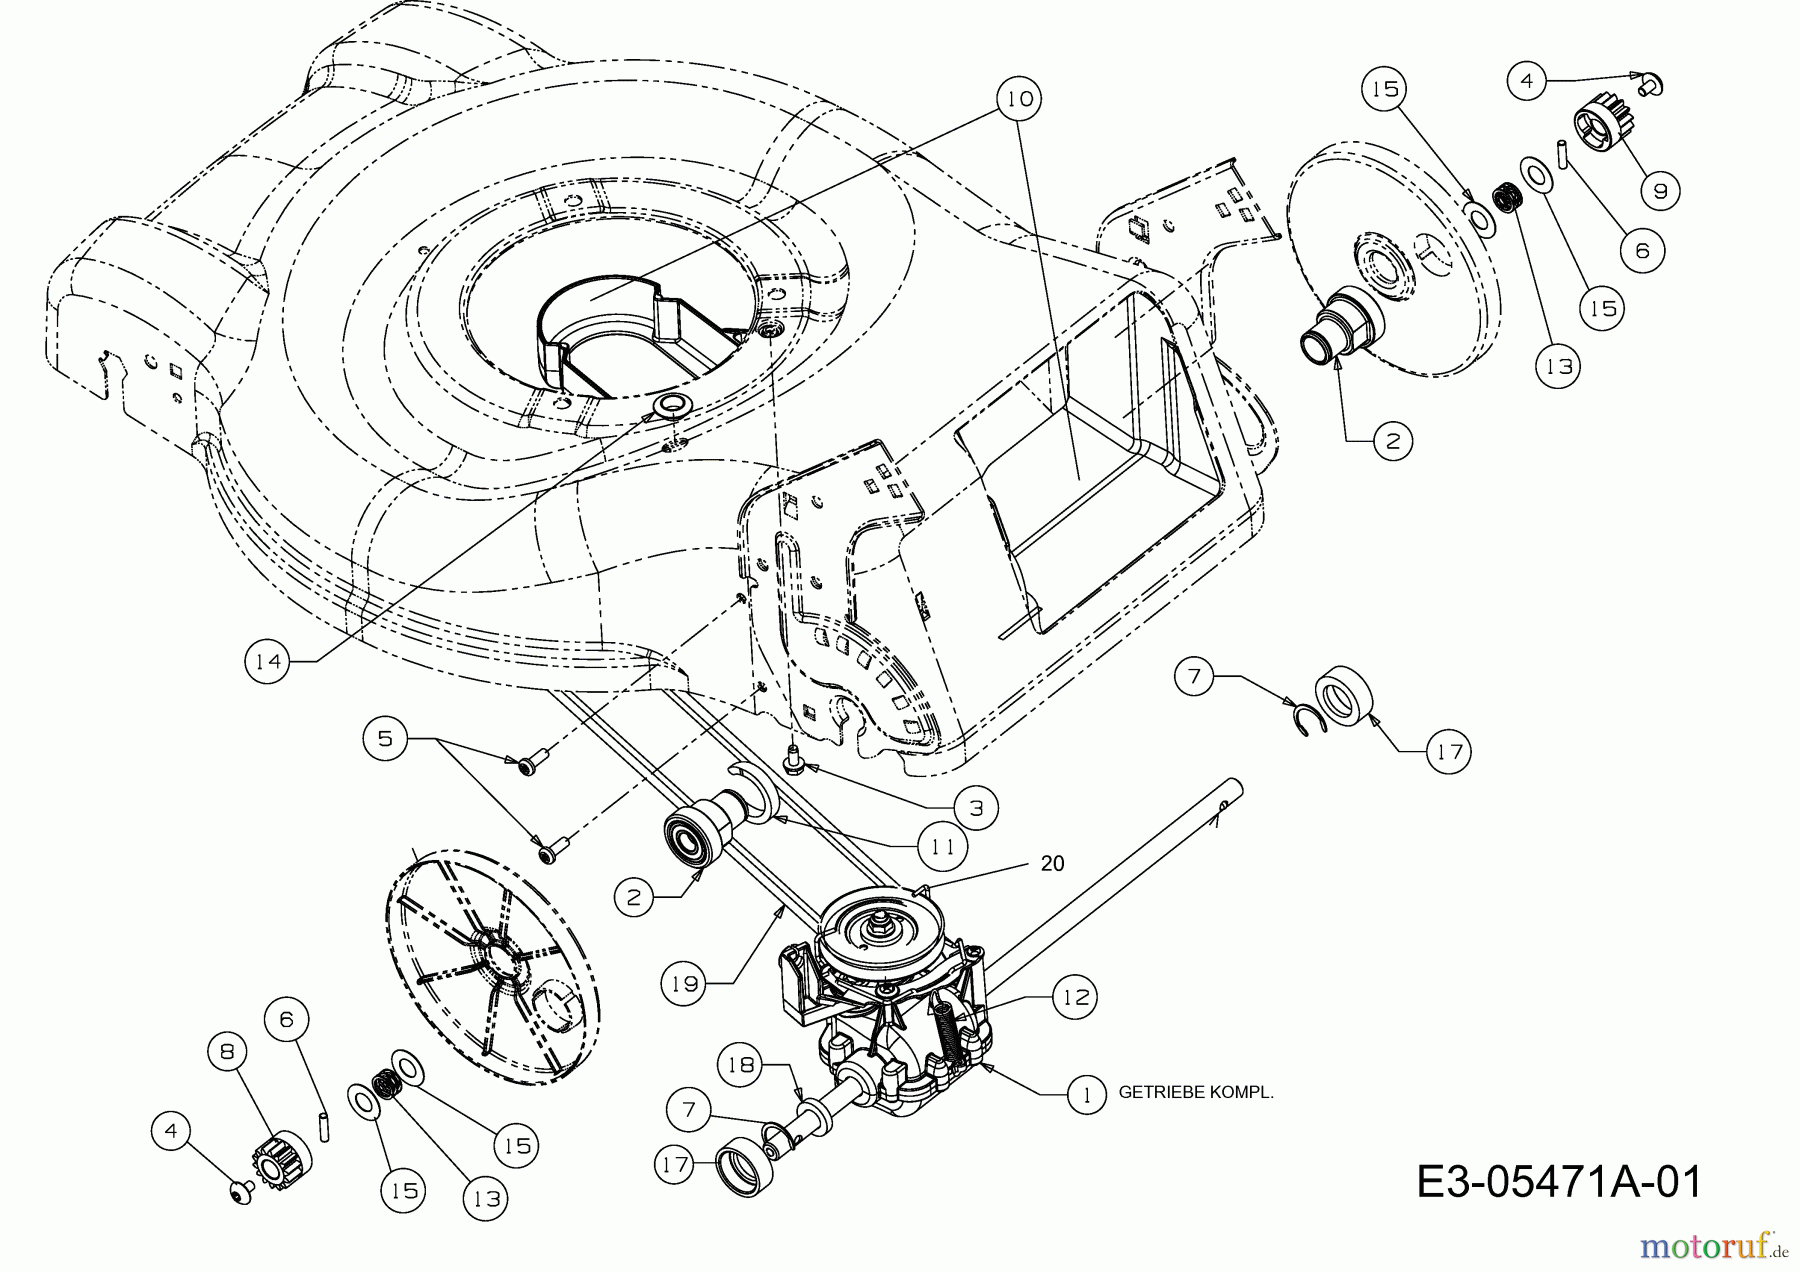  Bricoline Petrol mower self propelled 46 SP 12E-J54J625  (2010) Gearbox